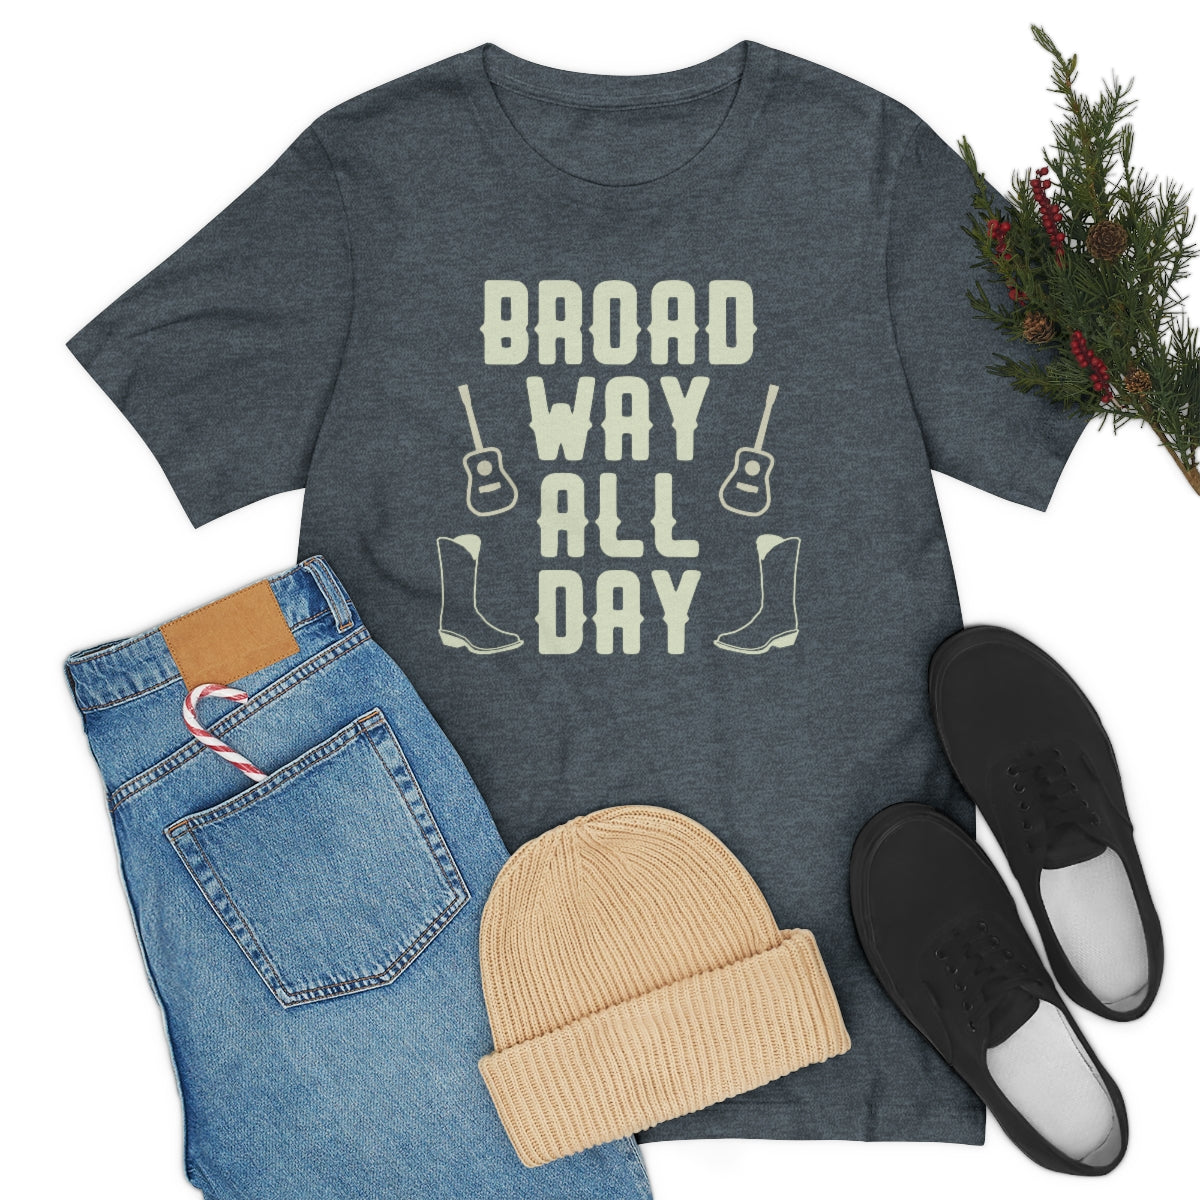 Broad Way All Day Tshirt